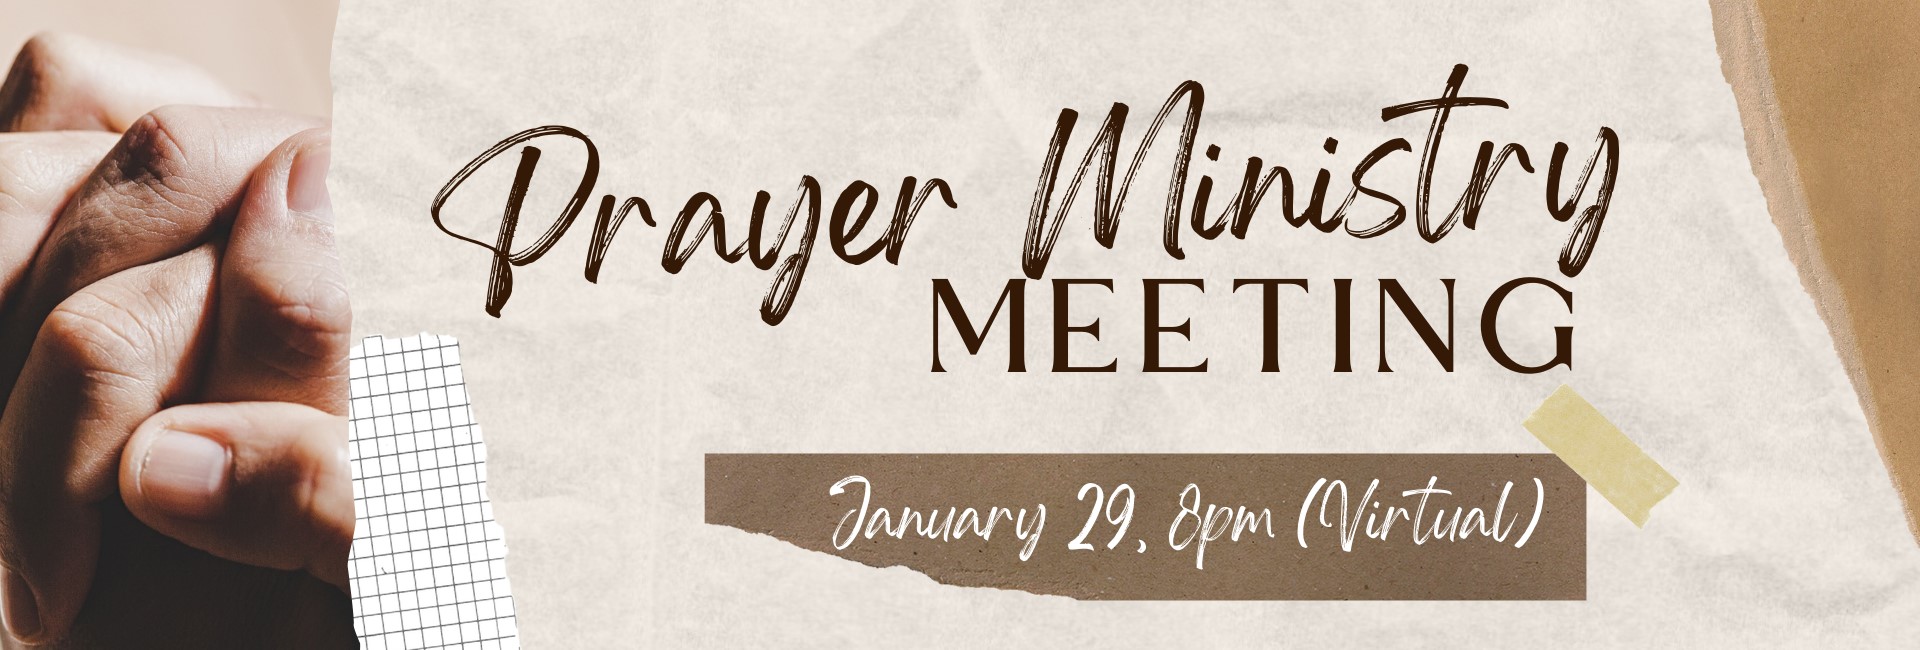 Prayer Ministry Meeting